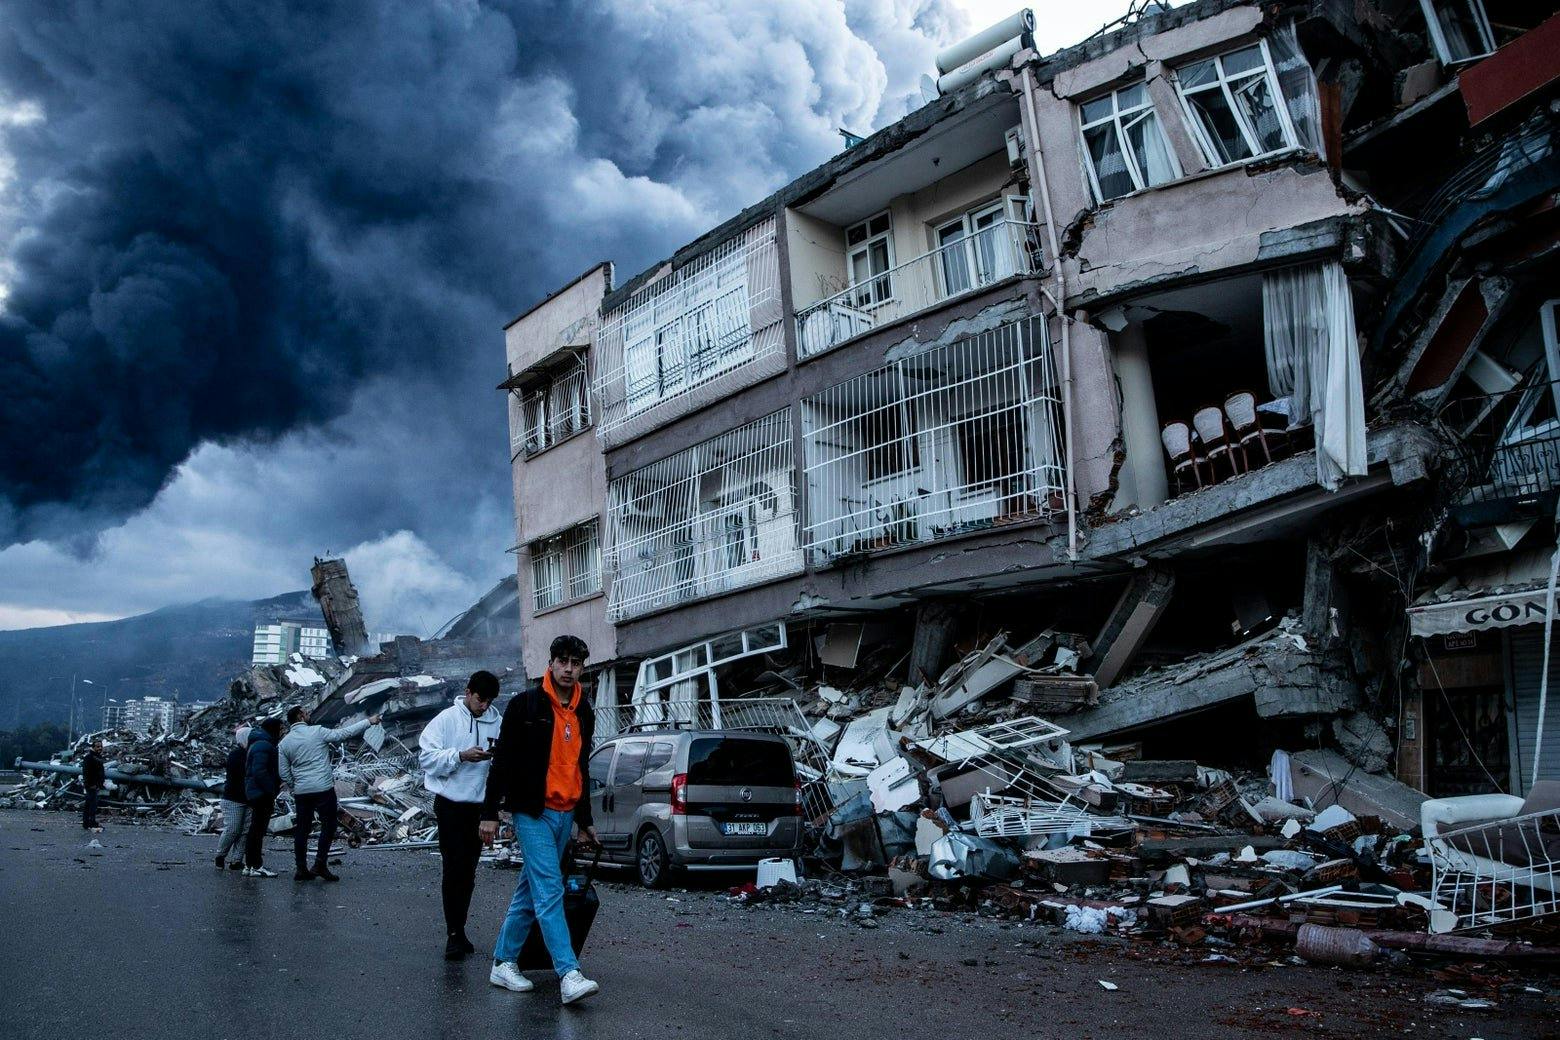 Türkiye earthquake: the deadly cost of profit-driven development